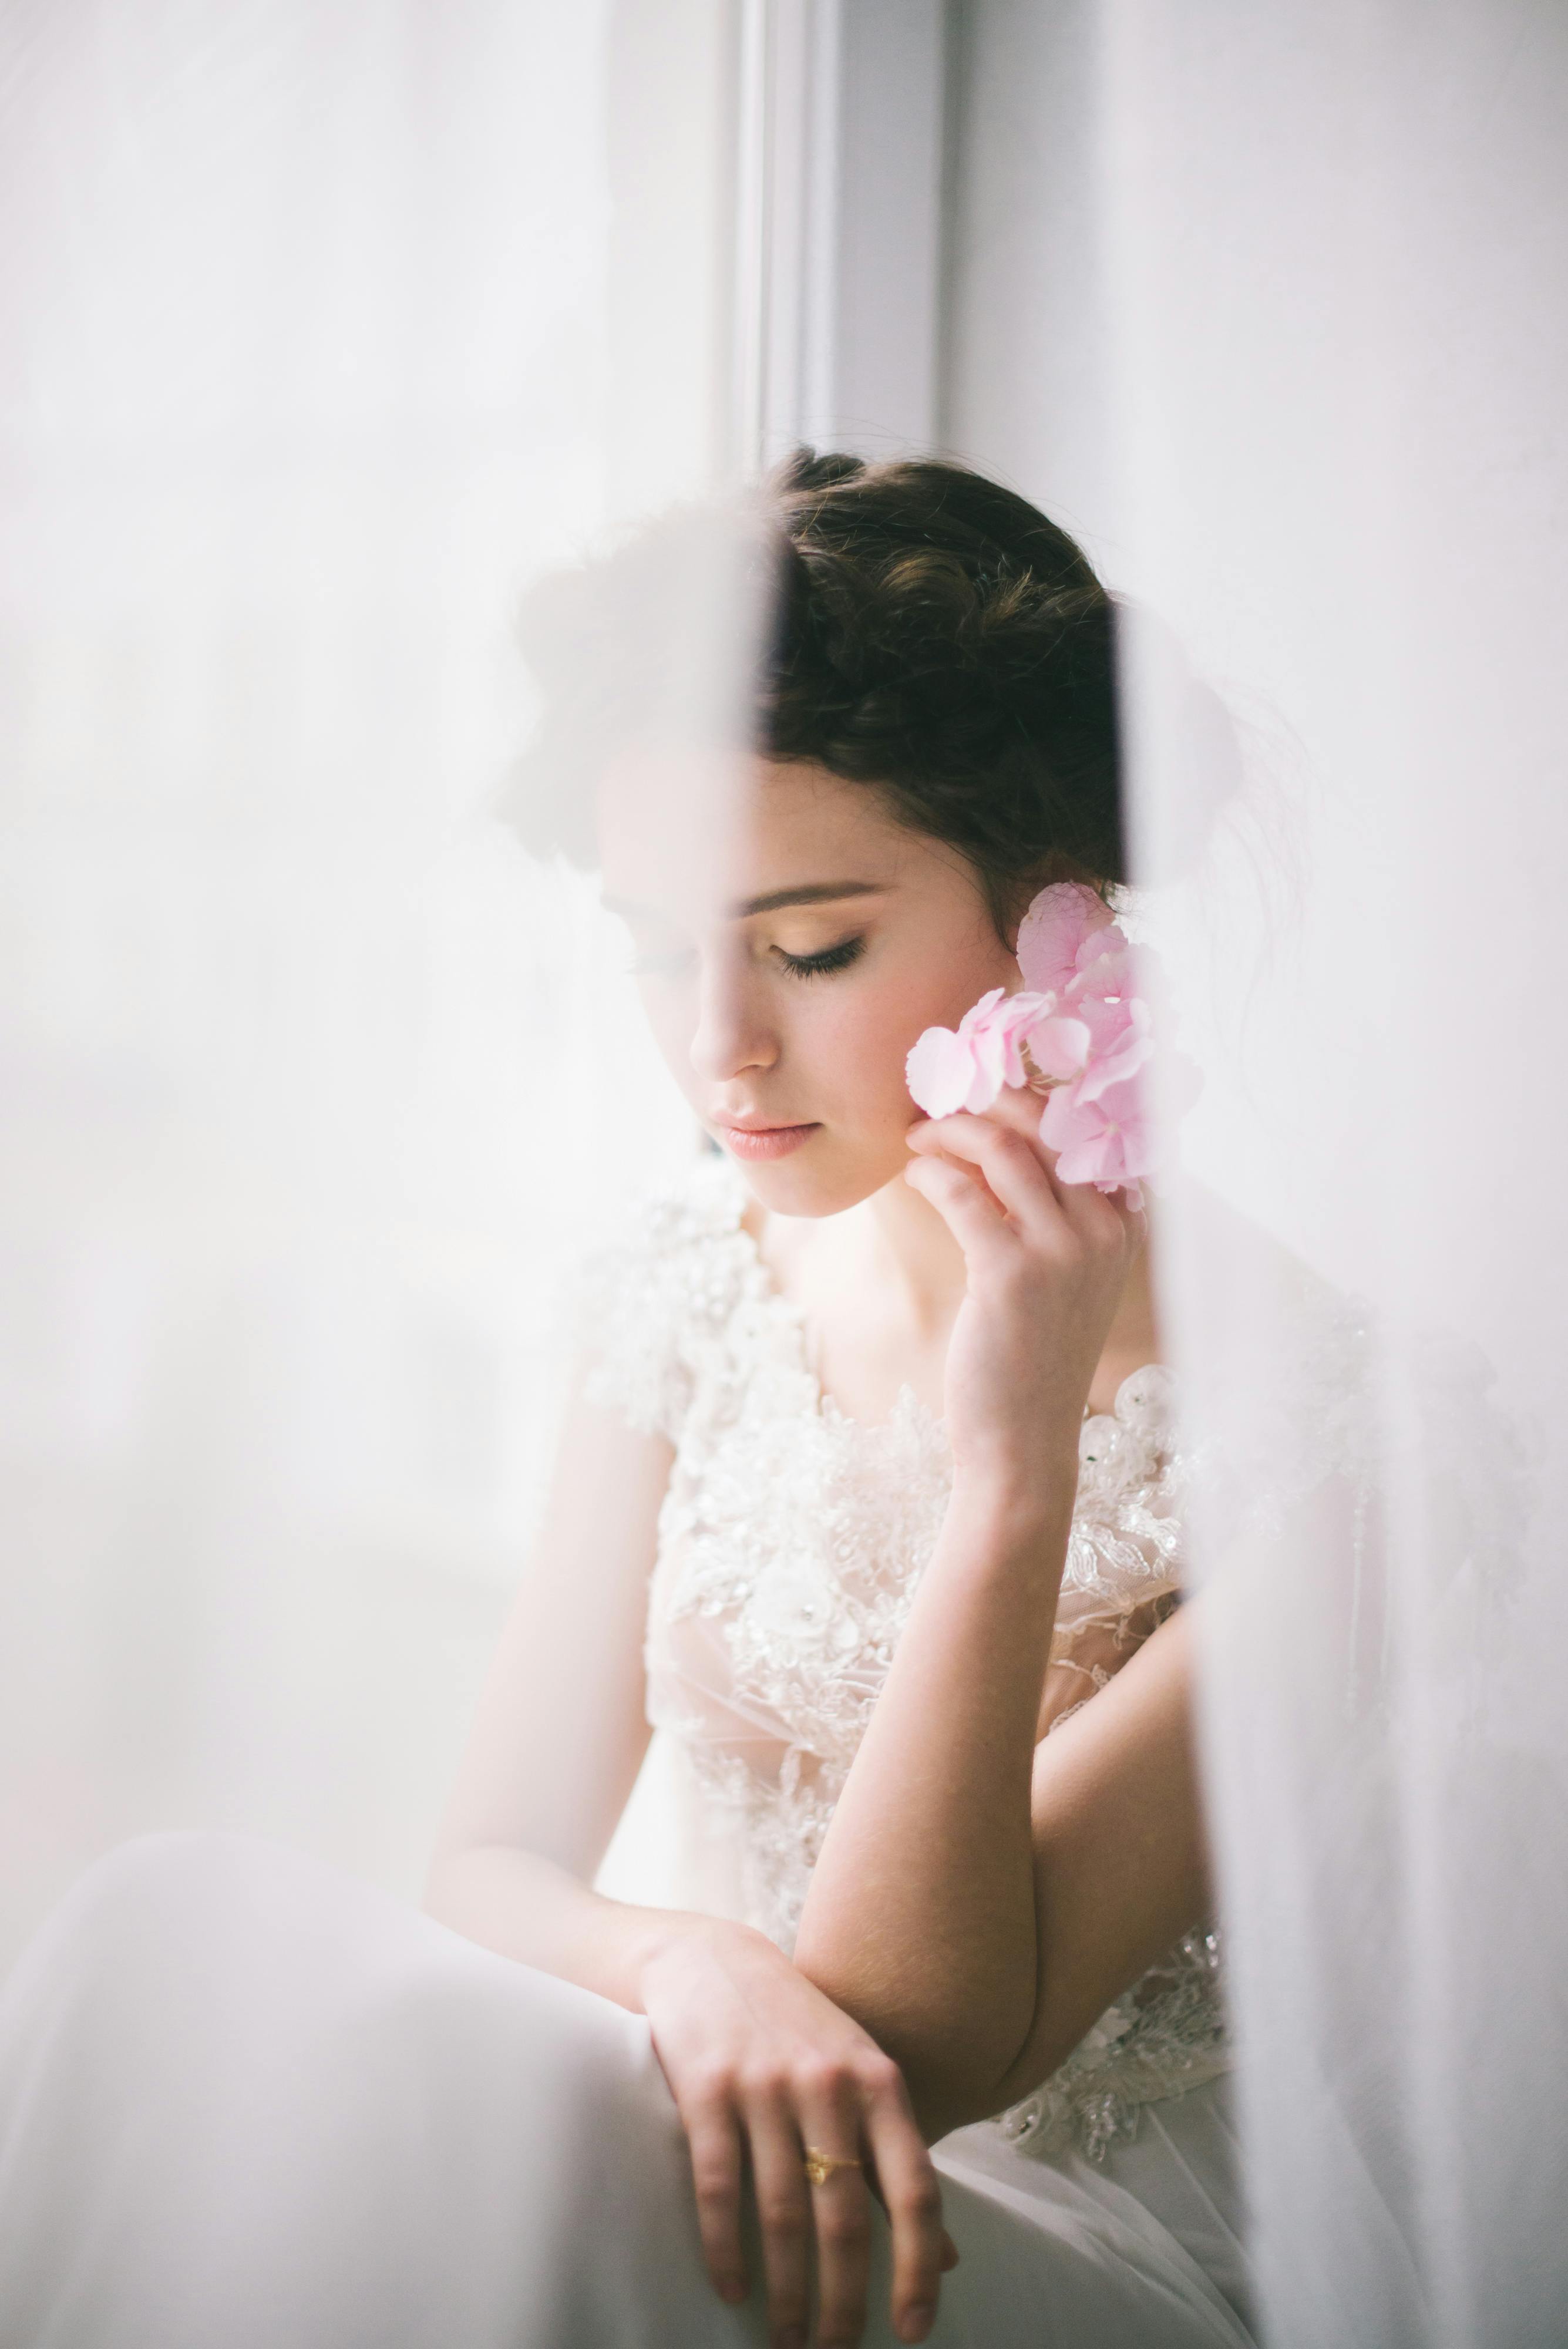 Bridal Dress Photos, Download The BEST Free Bridal Dress Stock Photos ...